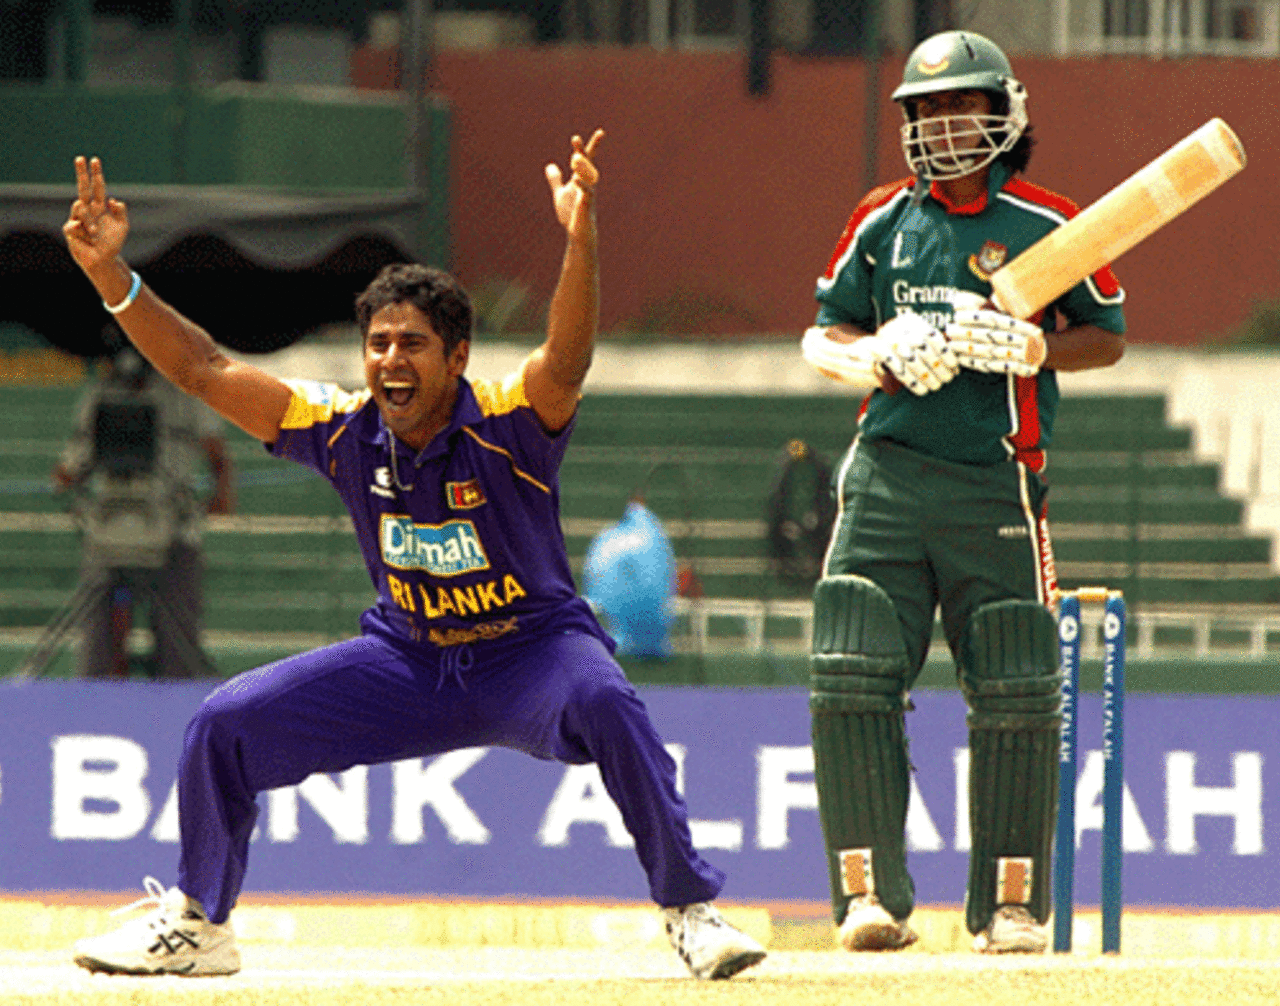 Chaminda Vaas appeals unsuccessfully for the wicket of  Bangladesh batsman Javed Omar, Sri Lanka v Bangladesh, Sinhalese Sports Club Ground, Colombo, August 31, 2005